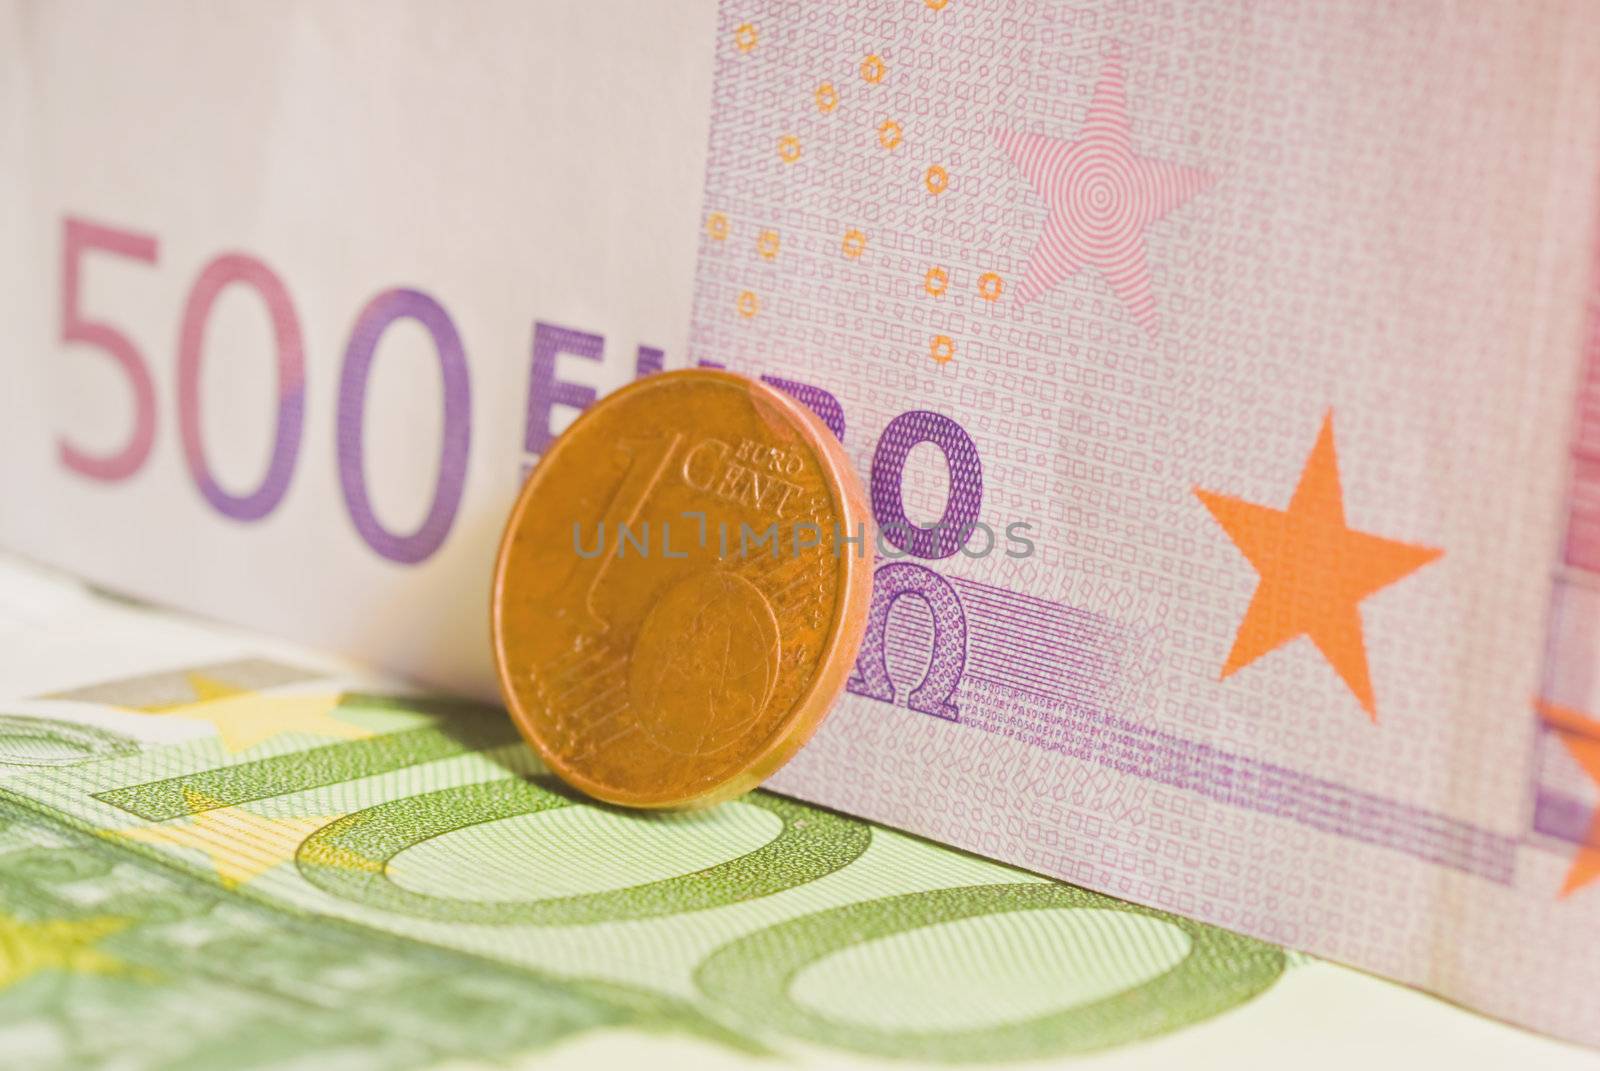 Coin and euro banknotes